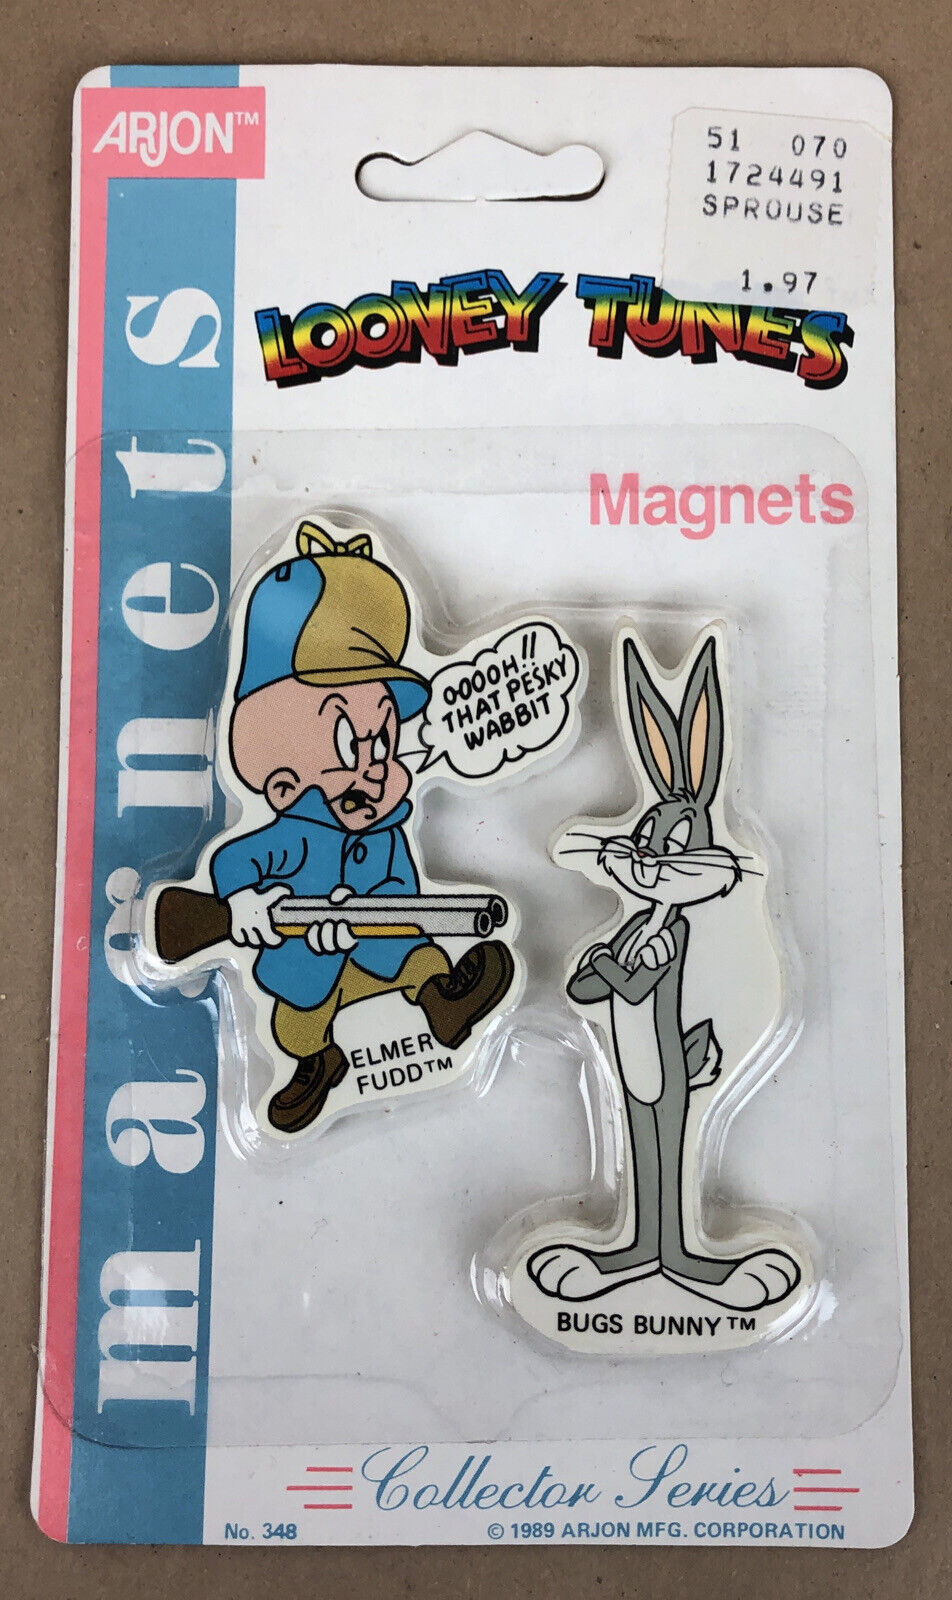 Vintage Arjon Looney Tunes Magnets 1989 Elmer Fudd Bug Bunny That Pesky Wabbit